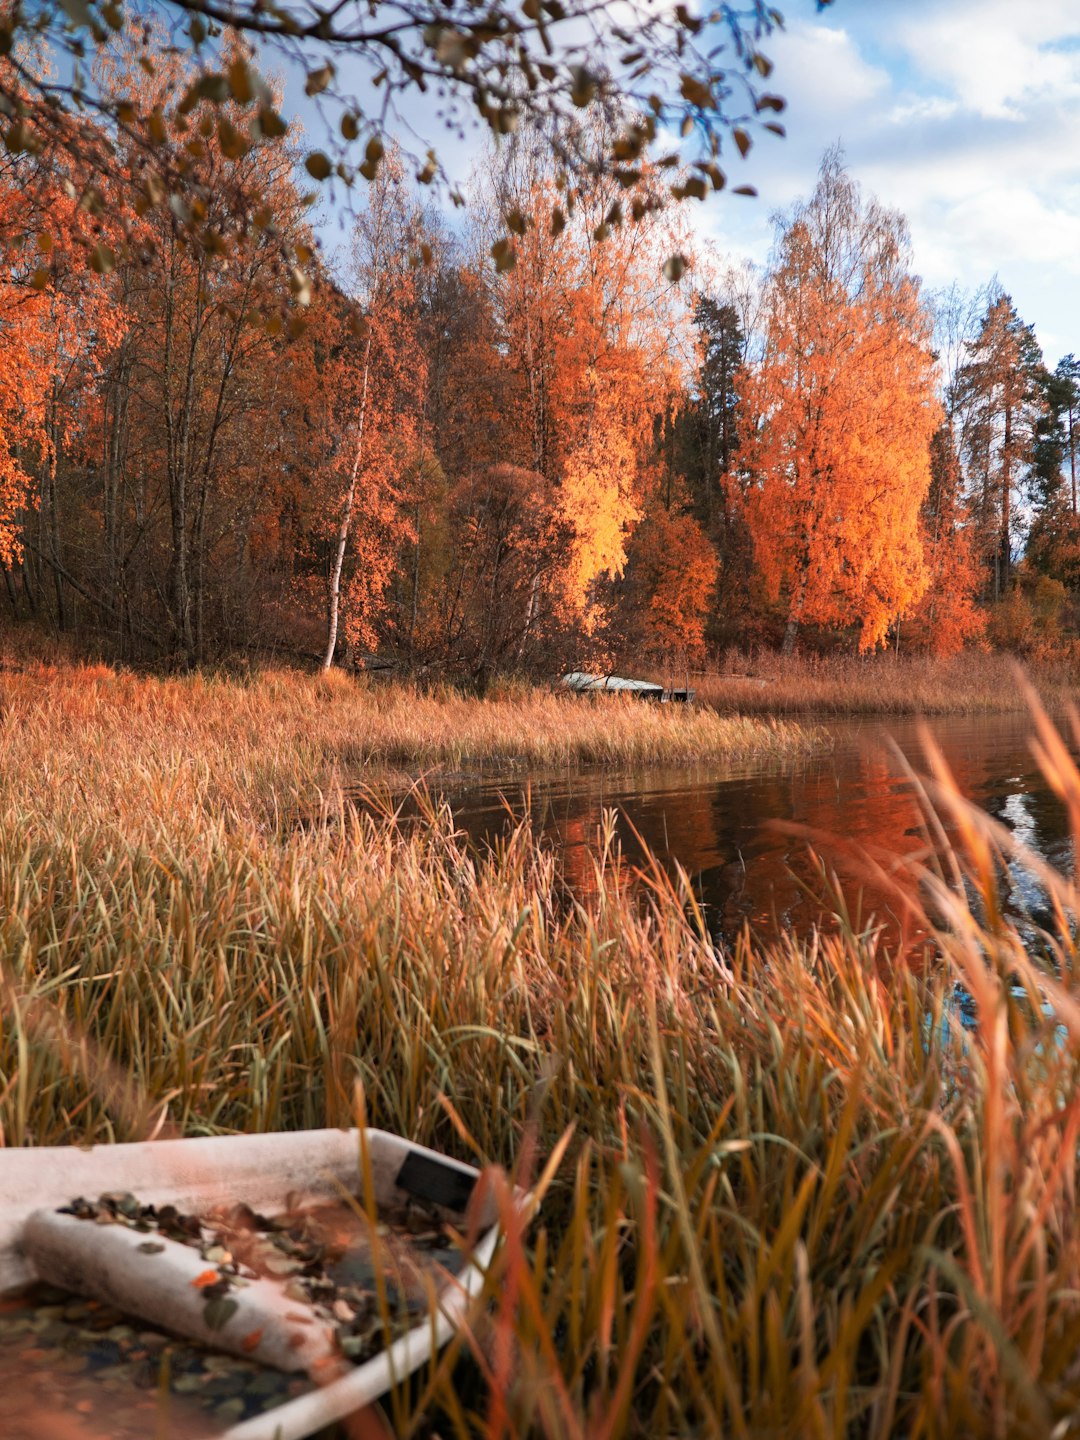 Nature reserve photo spot Central Finland Finland